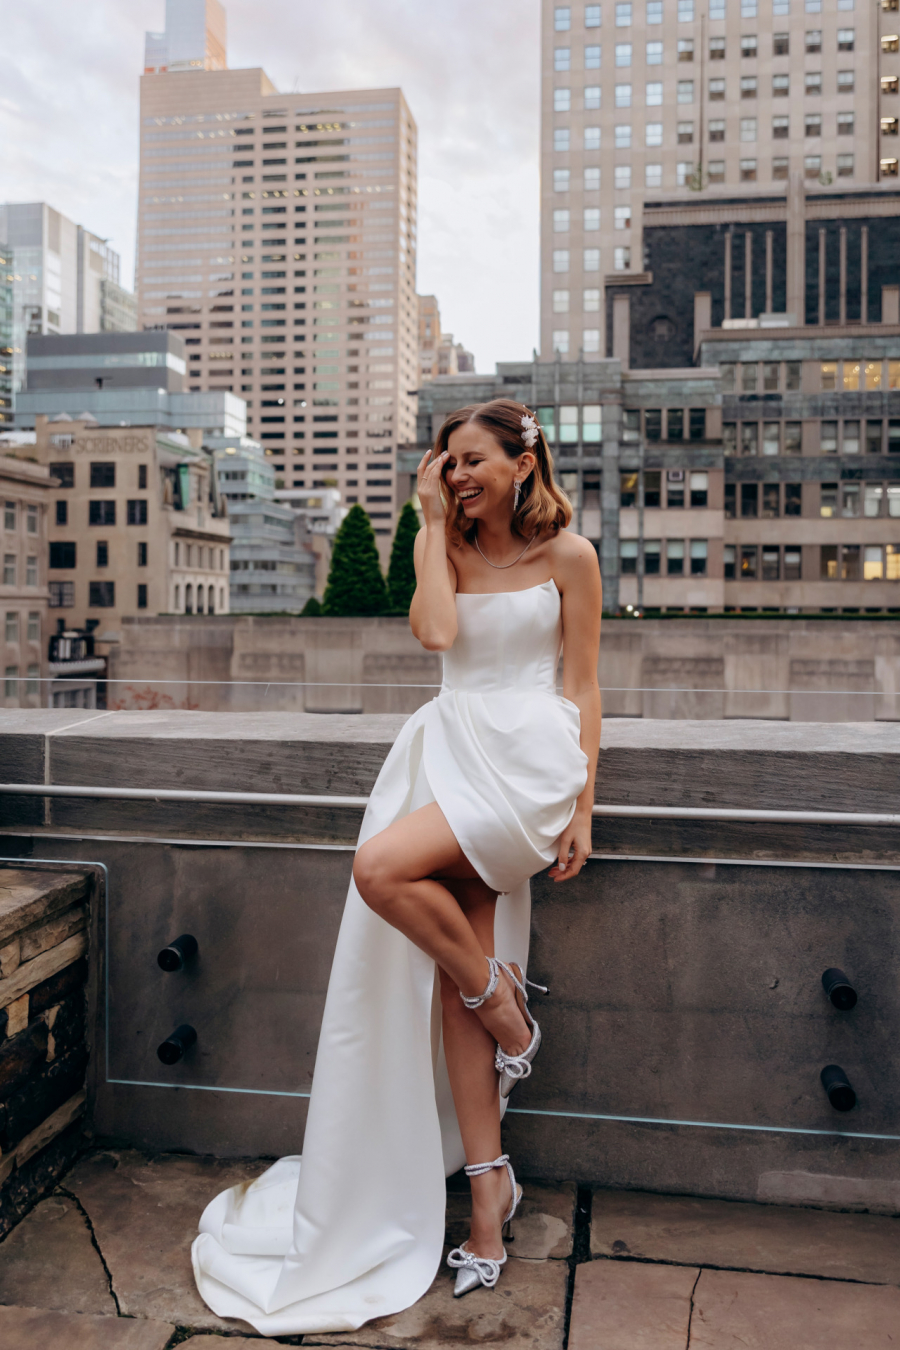 6 Rooftop wedding photoshoot New York City 16